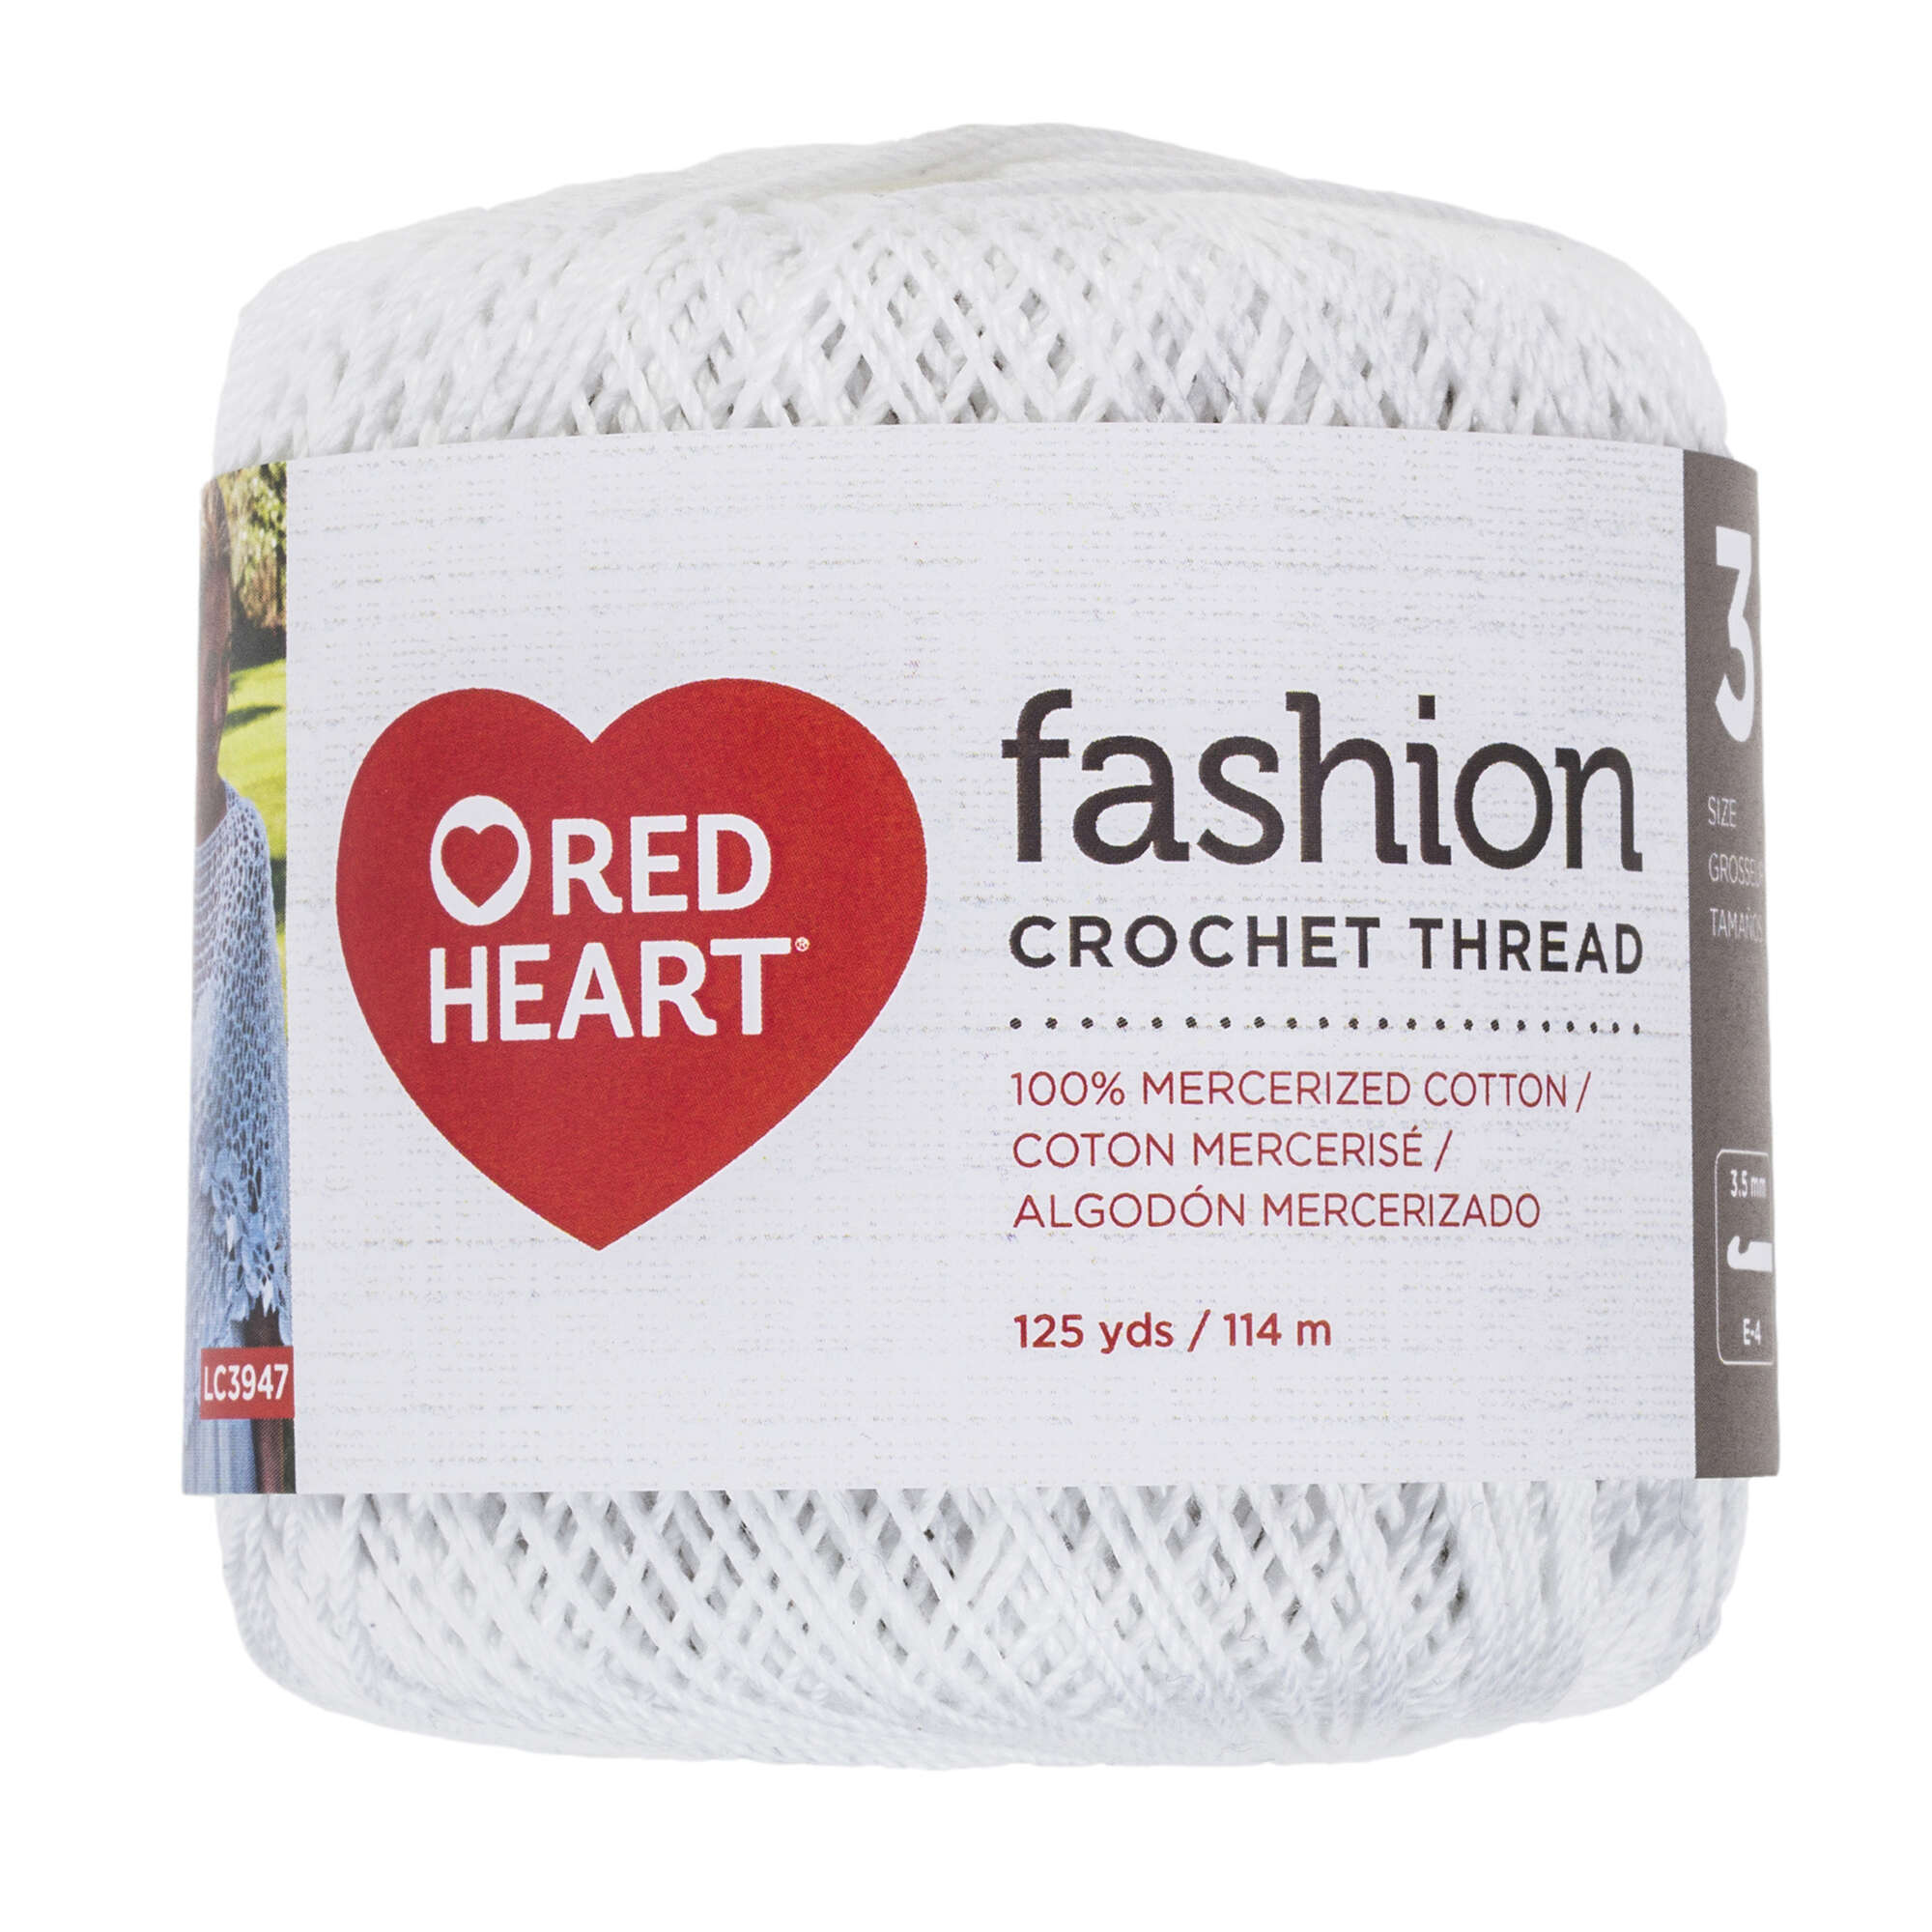 Thread Crochet Tips - Mezzacraft - Sharing the Art of Crochet